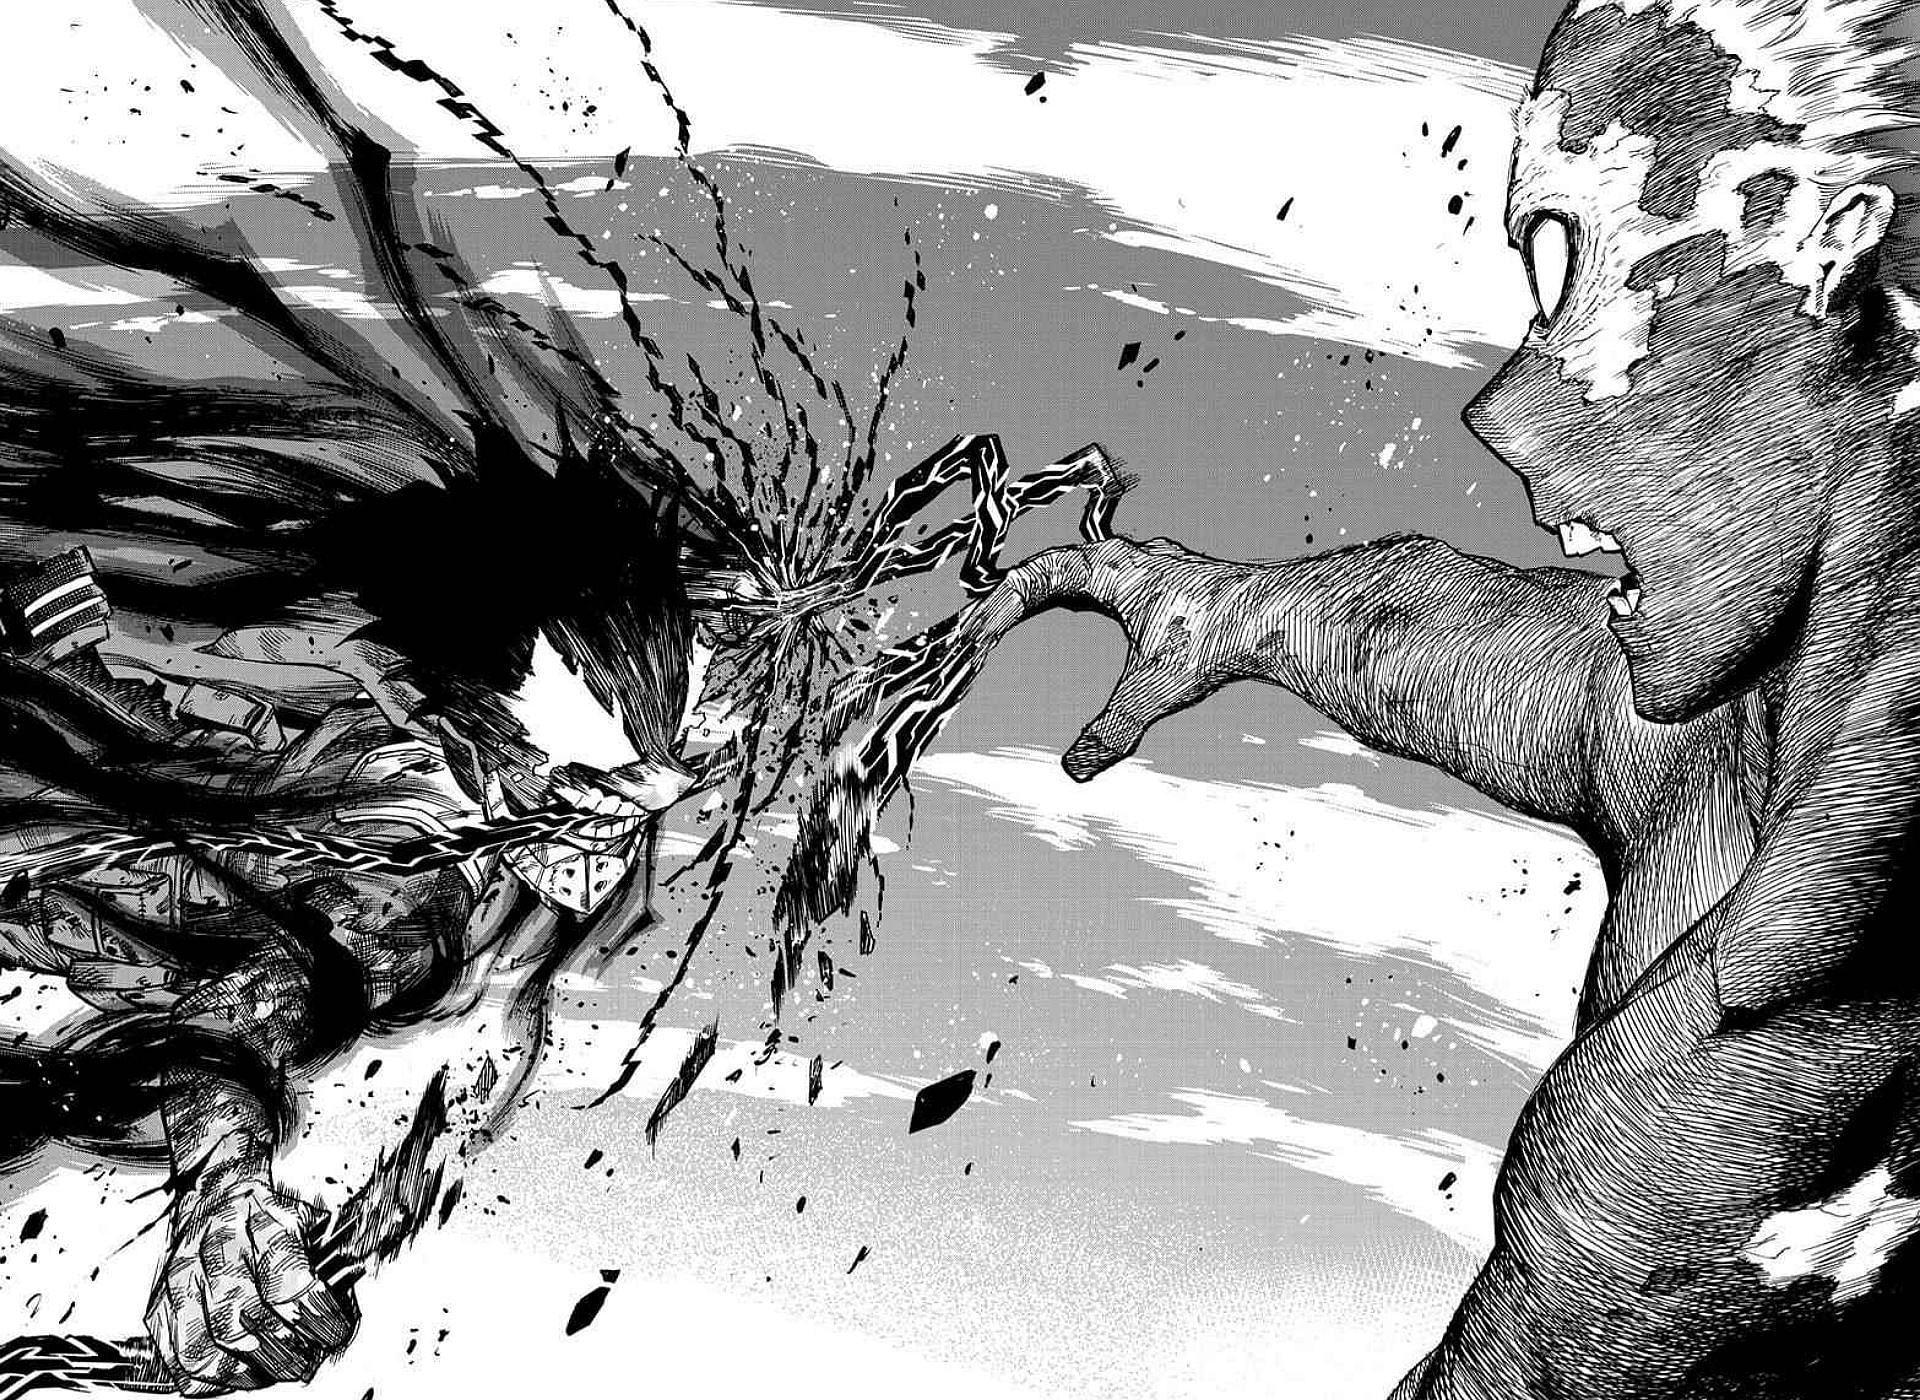 Deku vs Shigaraki is one of the most important fights in My Hero Academia (Image via Shueisha)